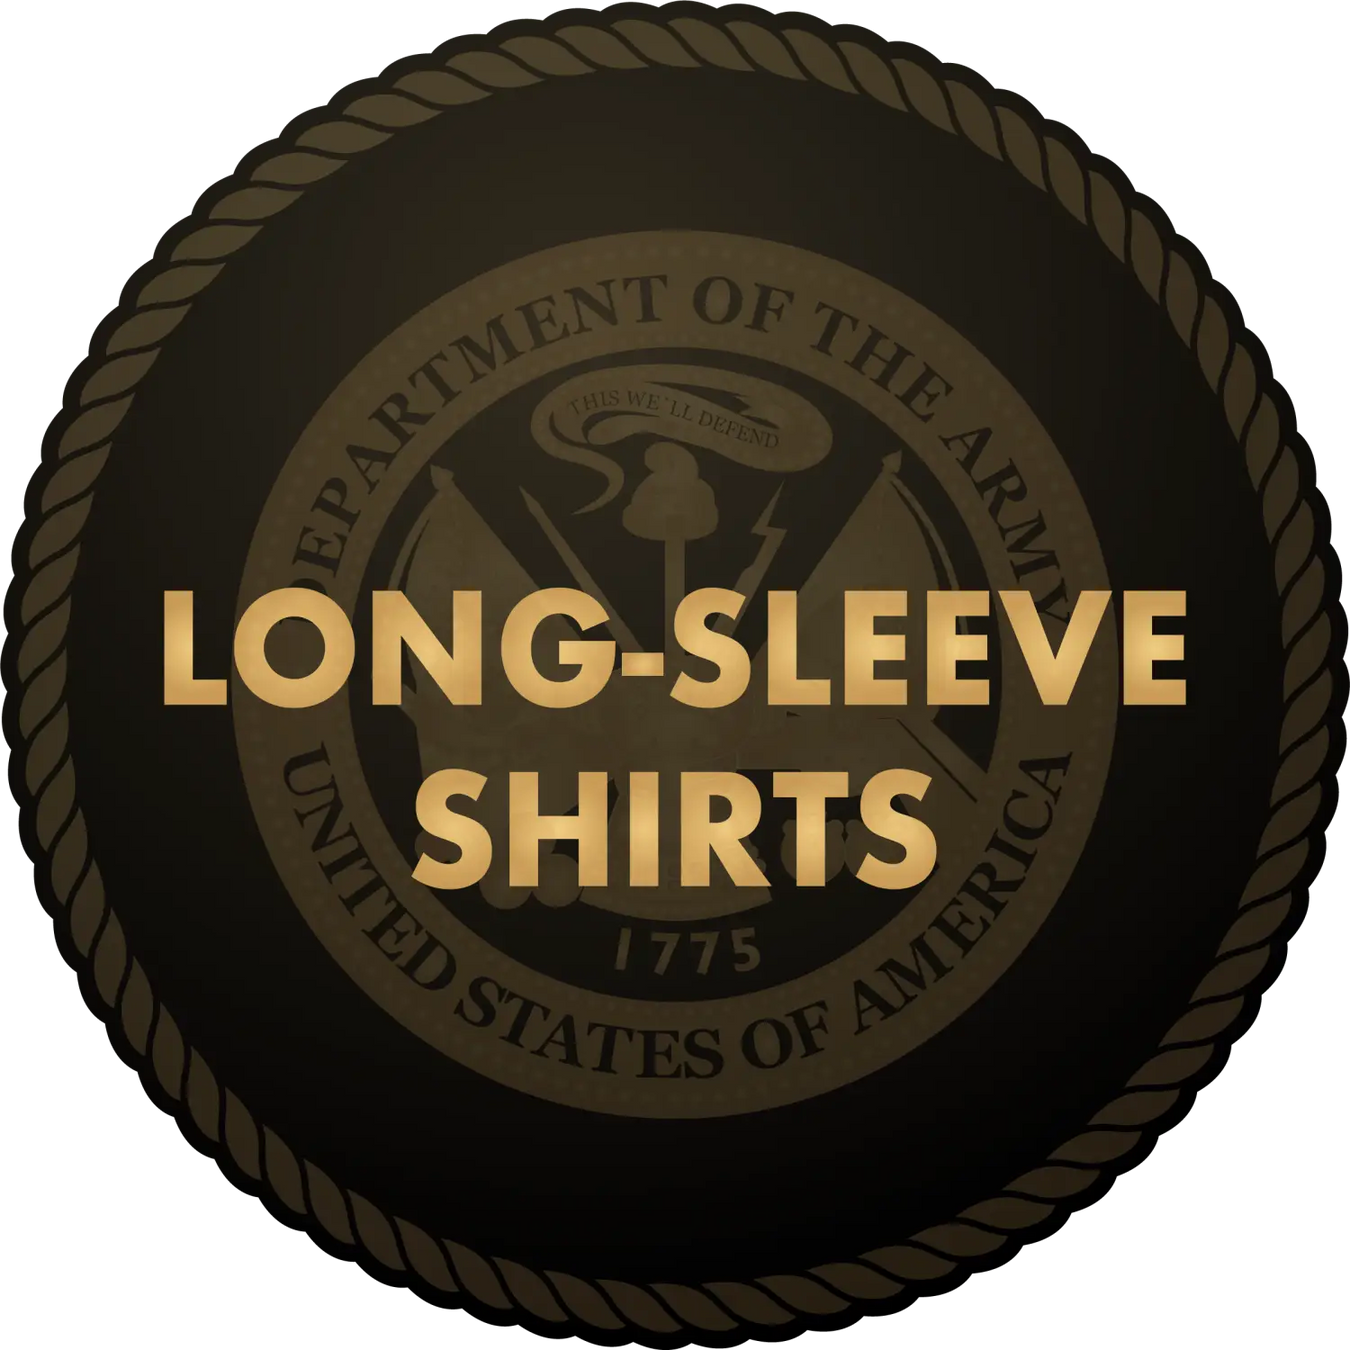 U.S. Army Long-Sleeve Shirts